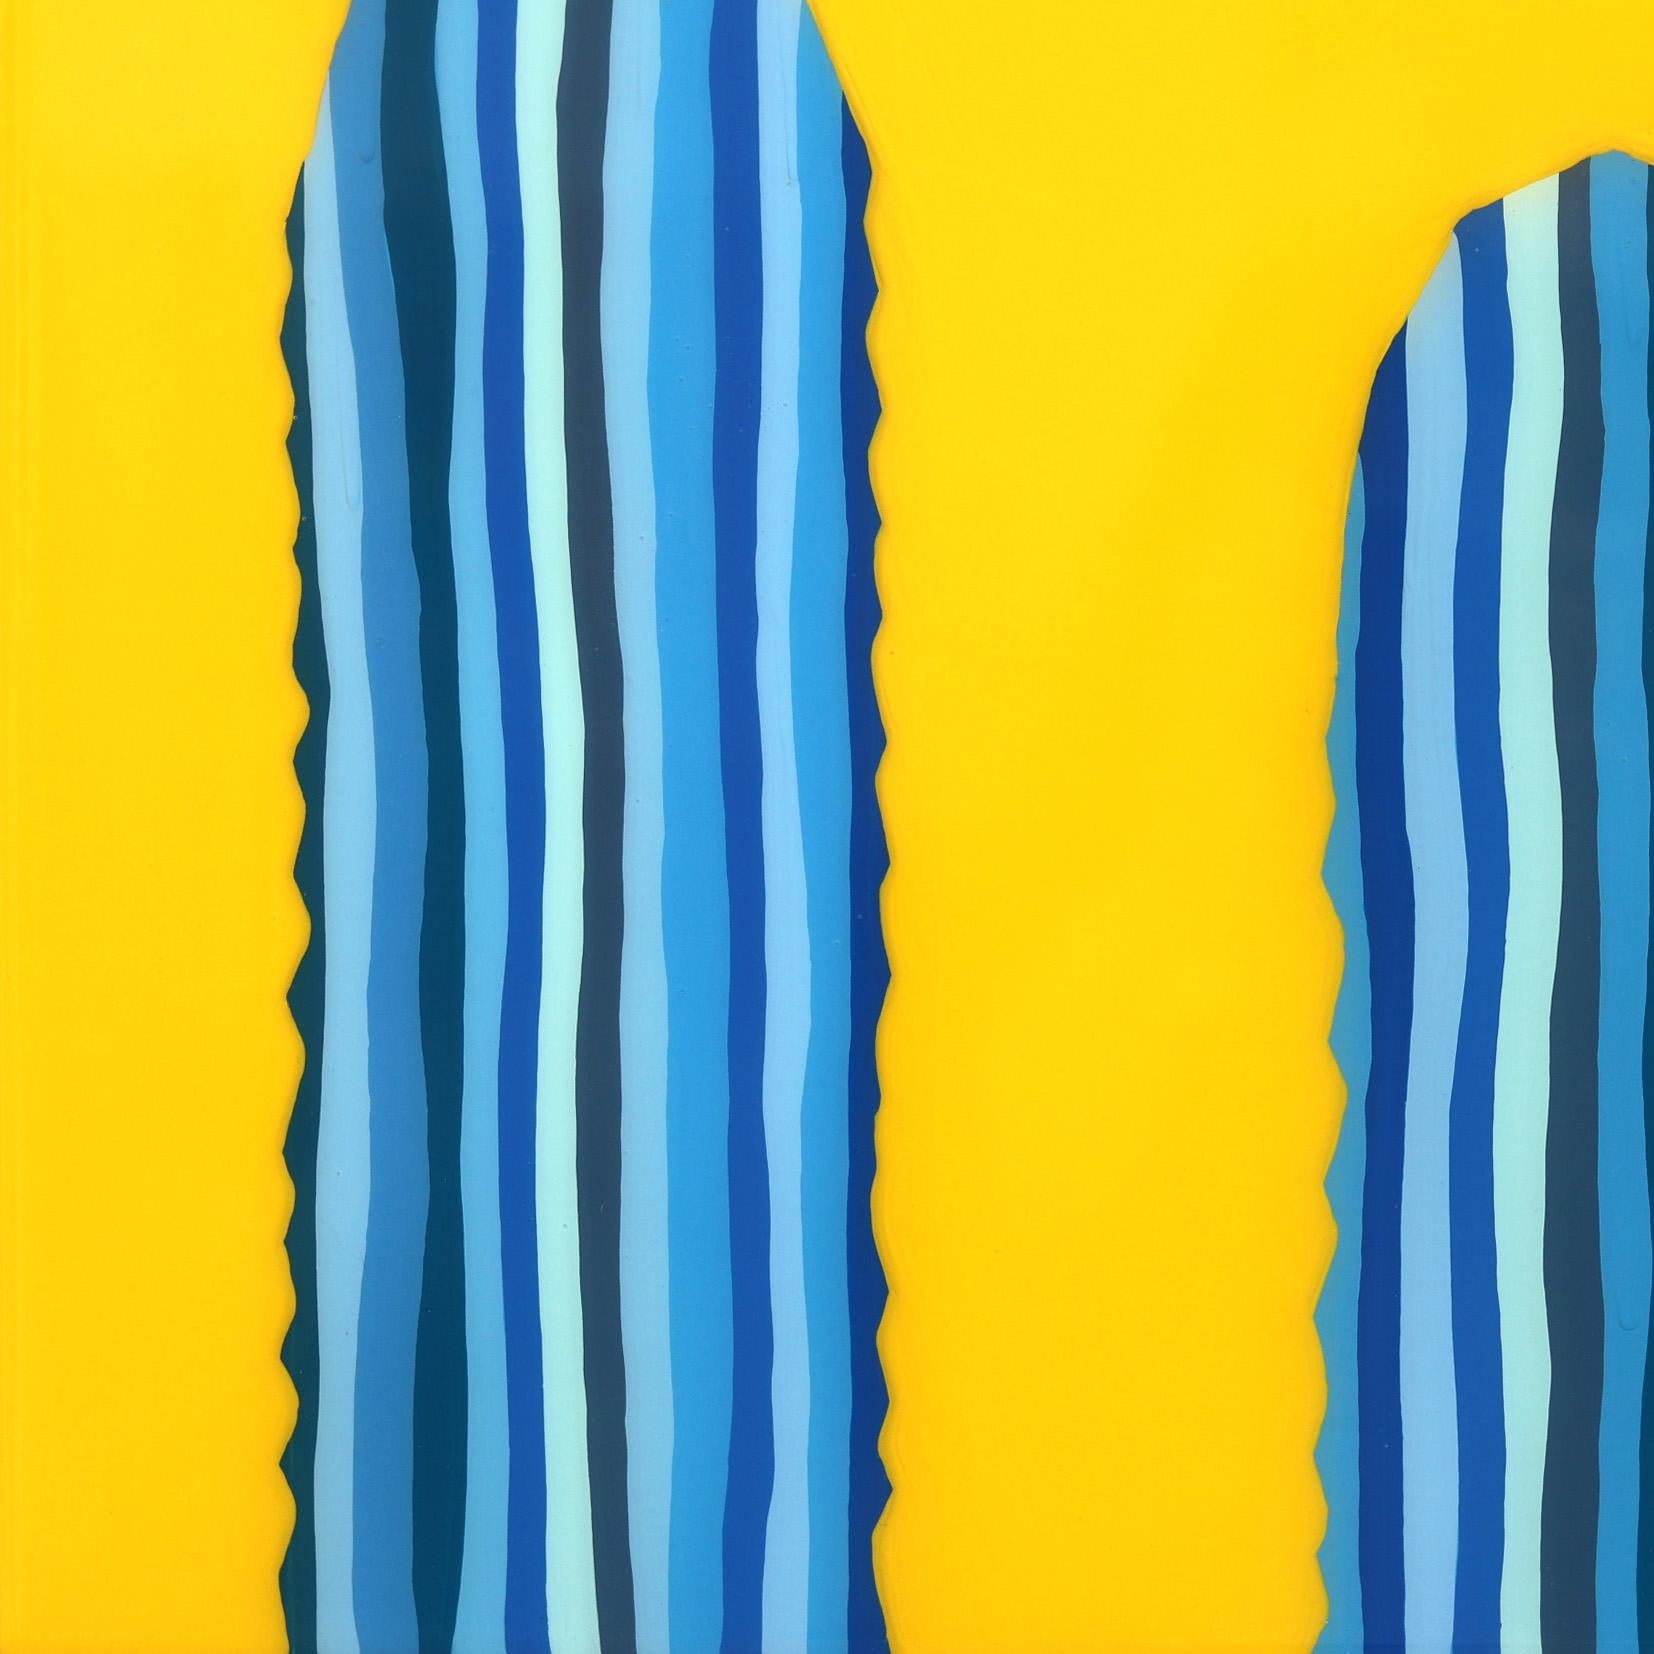 Mañana Amarilla- Vibrant Yellow Blue Southwest Inspired Pop Art Cactus Painting For Sale 3